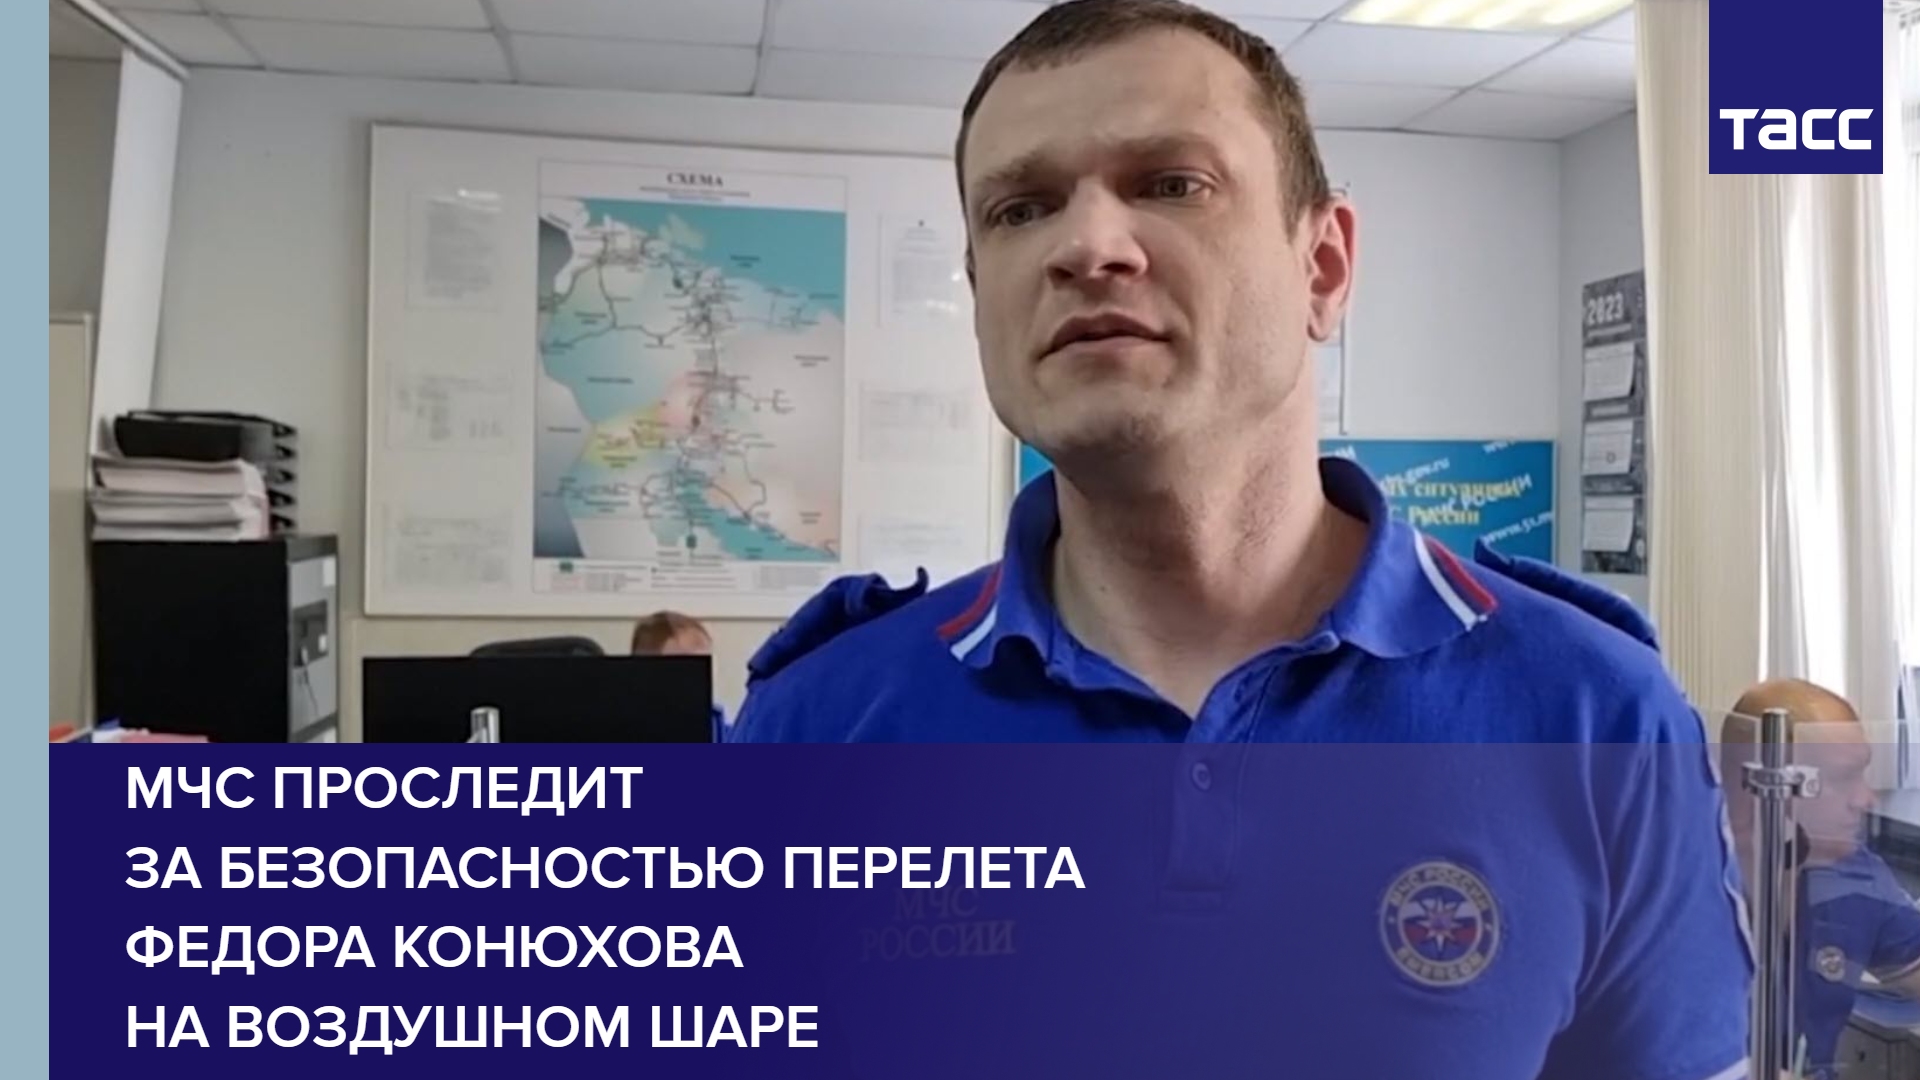 МЧС проследит за безопасностью перелета Федора Конюхова на воздушном шаре #shorts